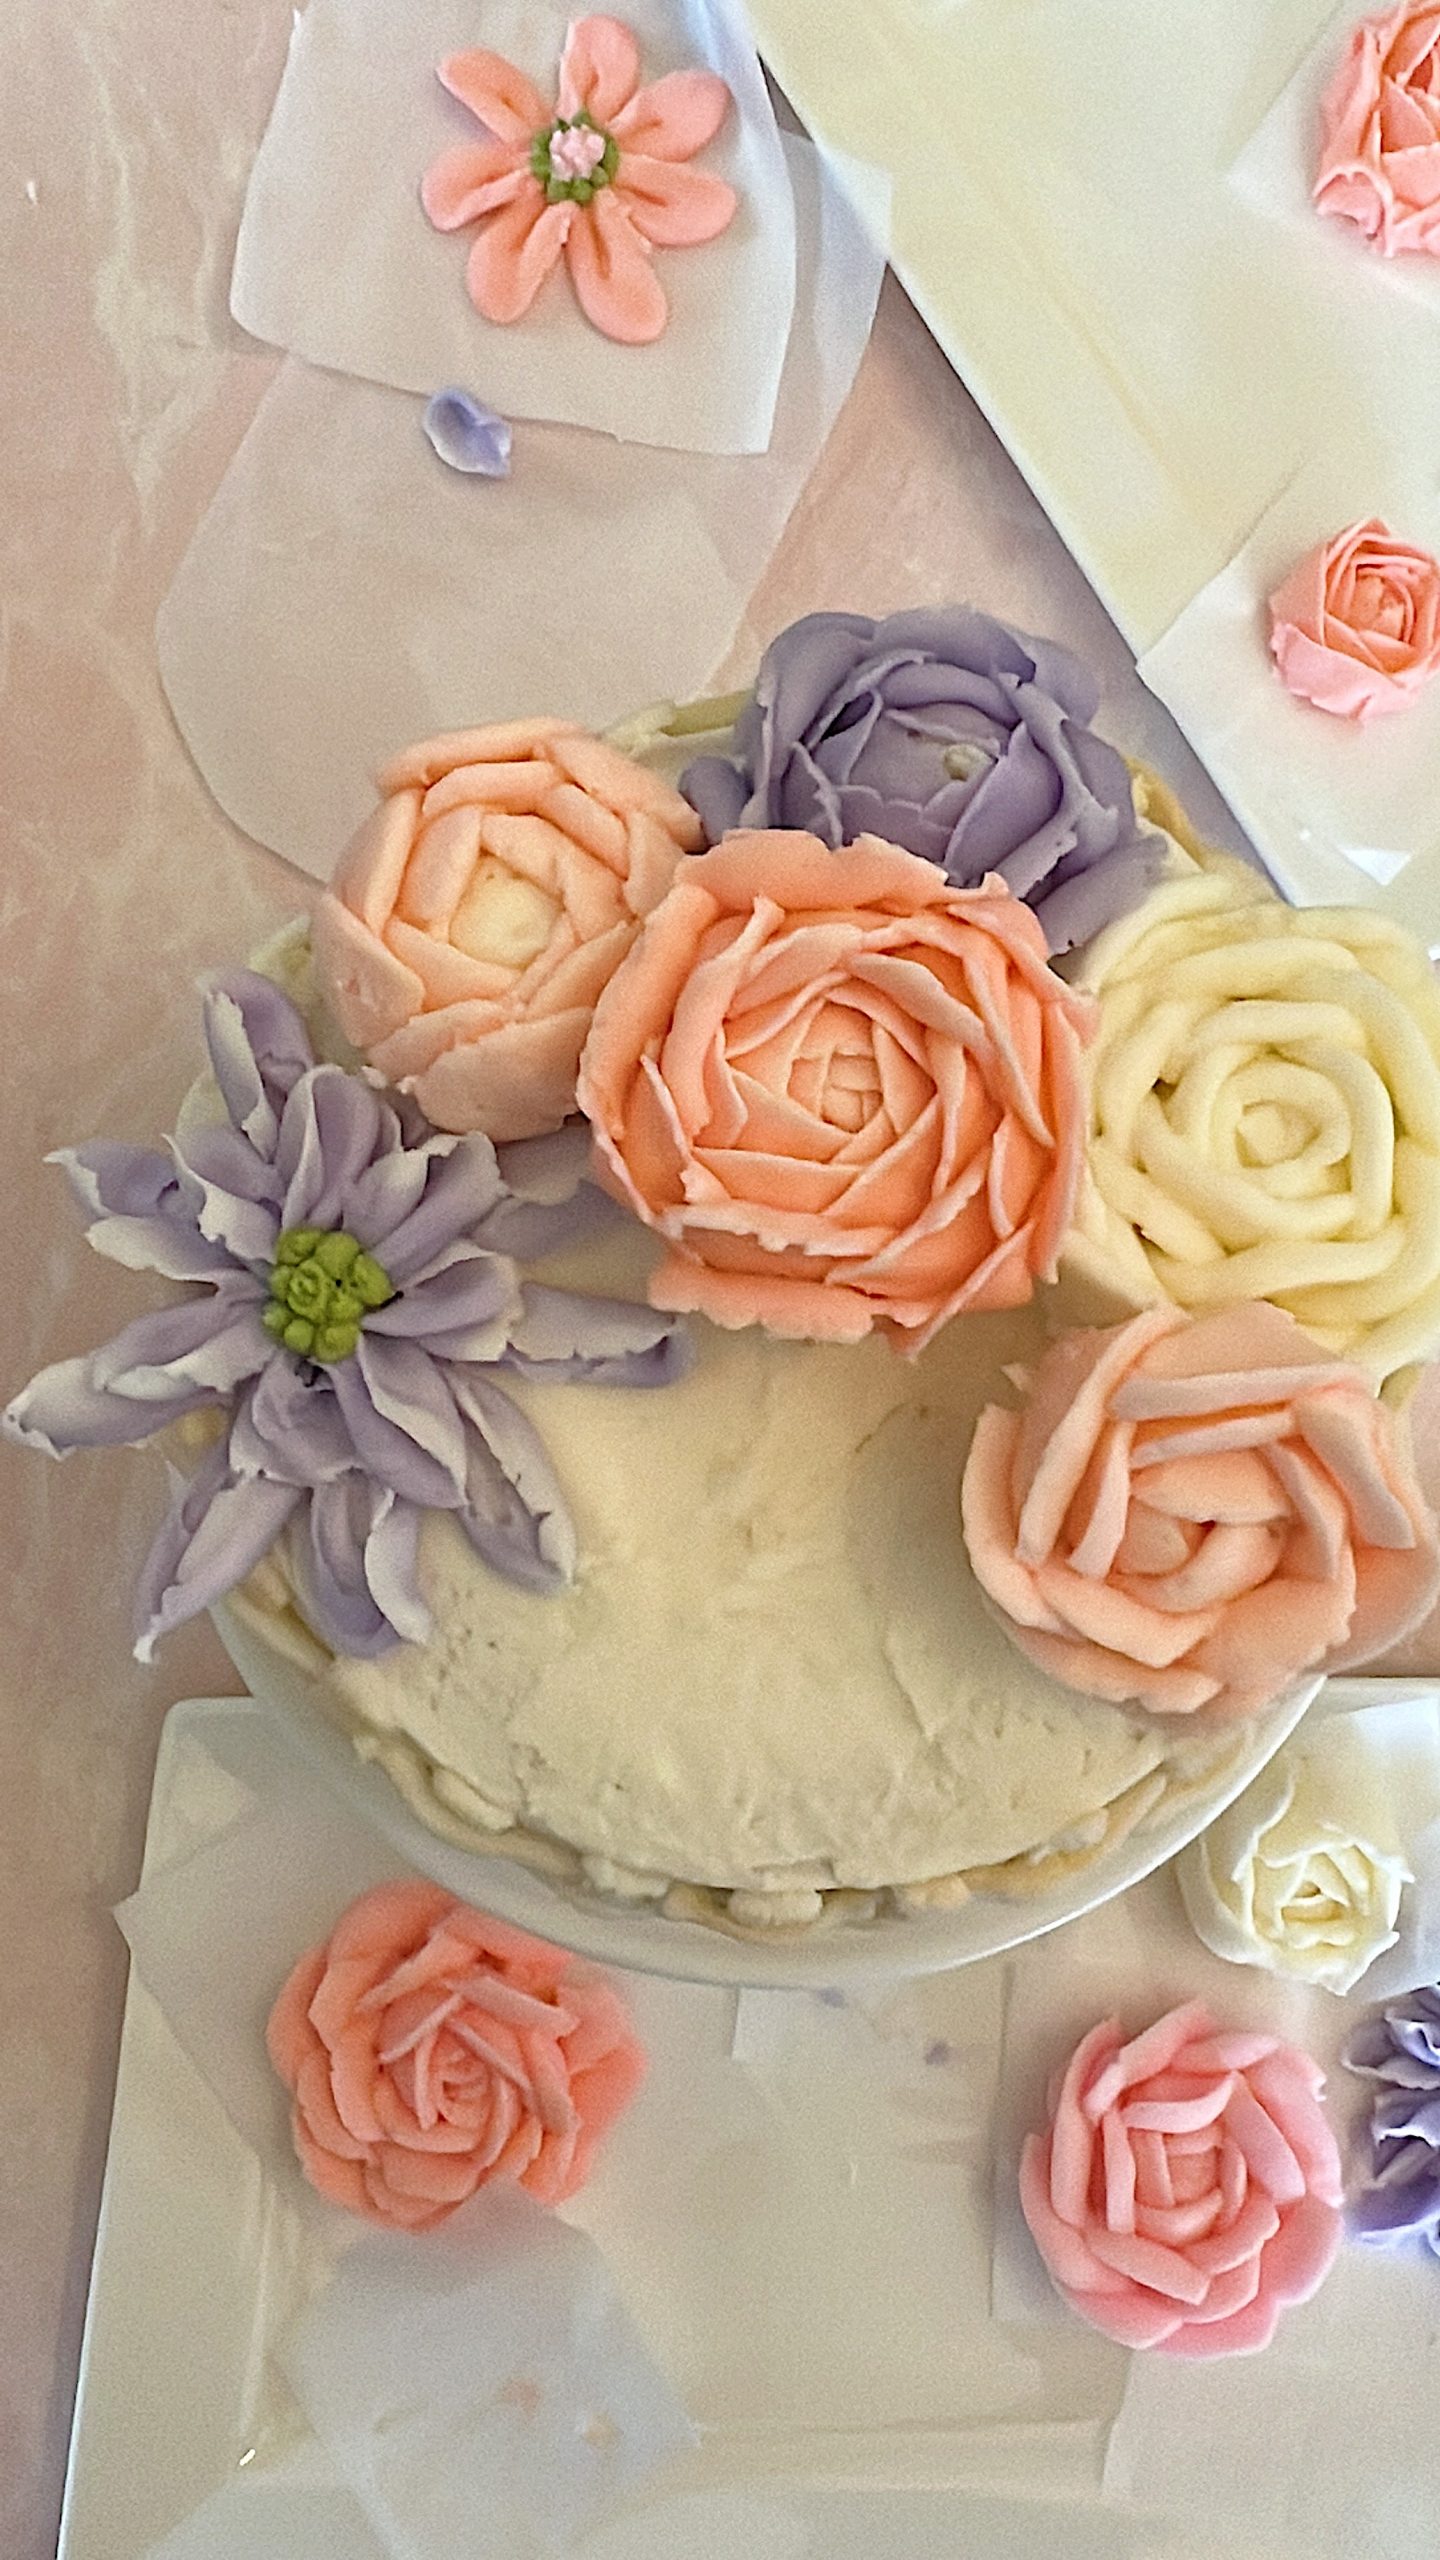 Easter Basket Flower Cake